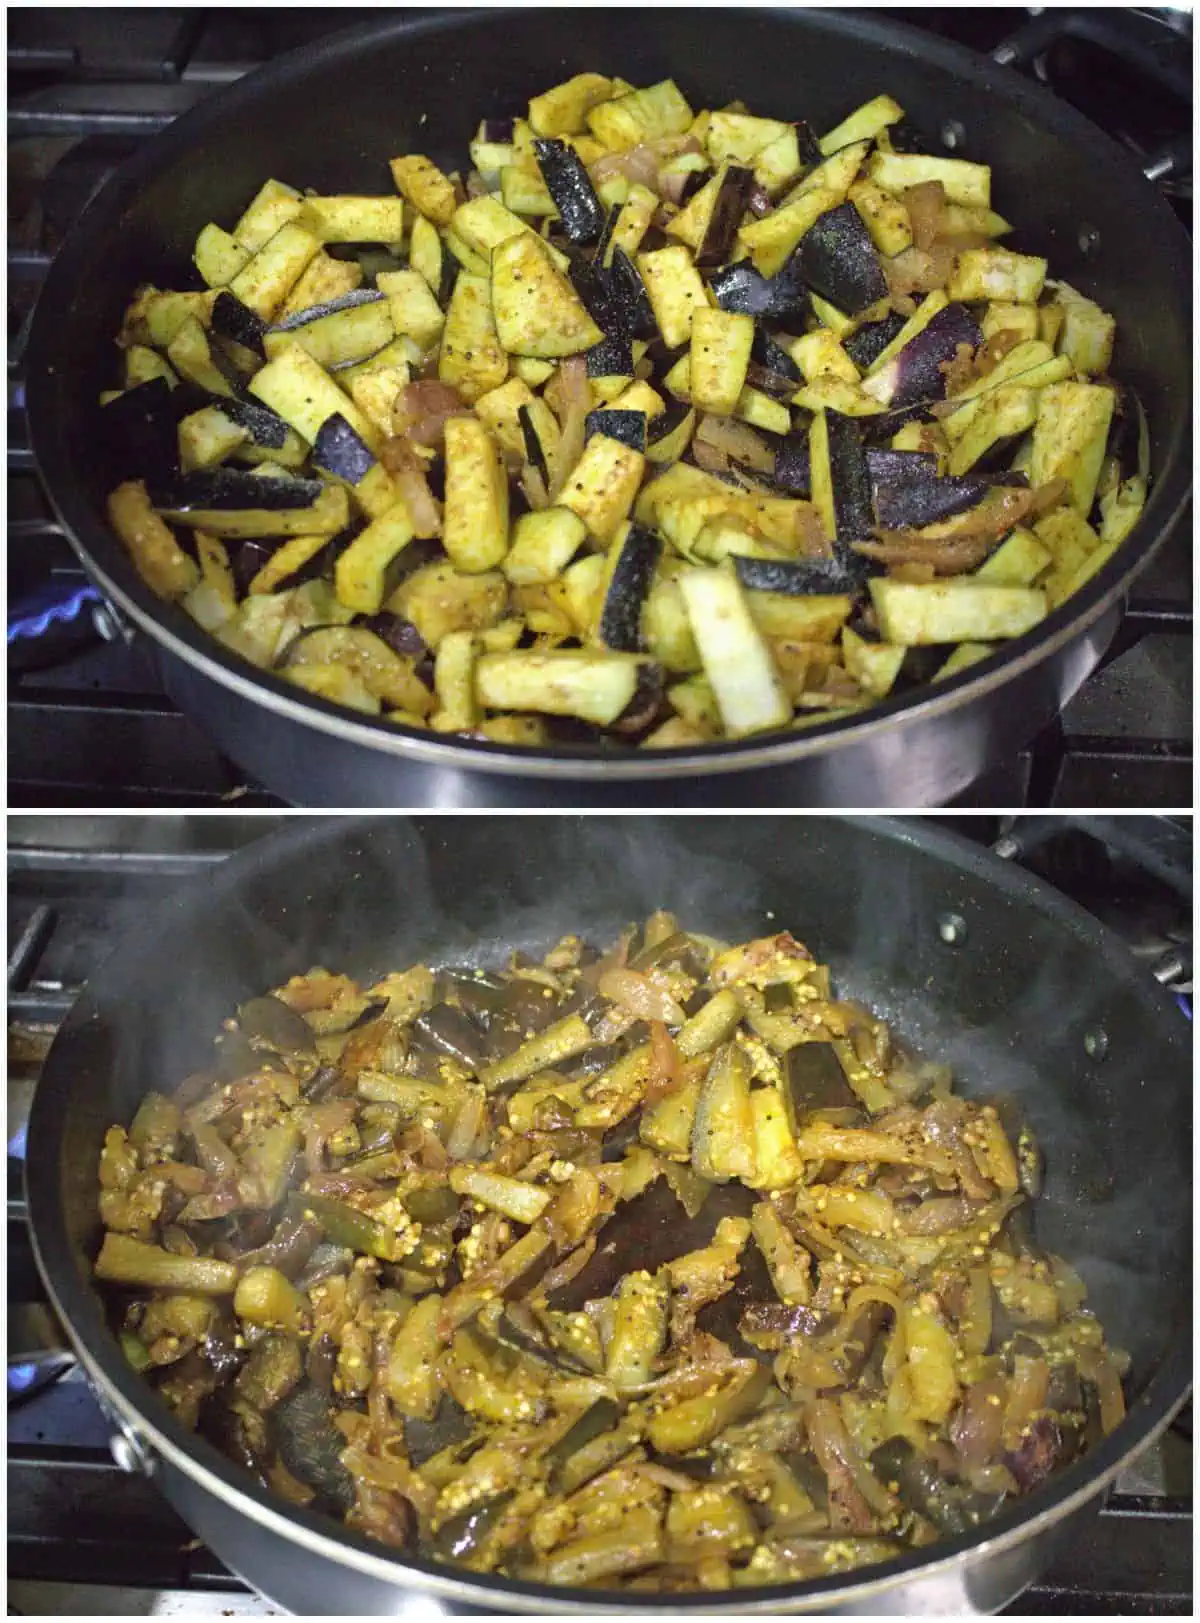 Cooking kathirikai in a wide pan.